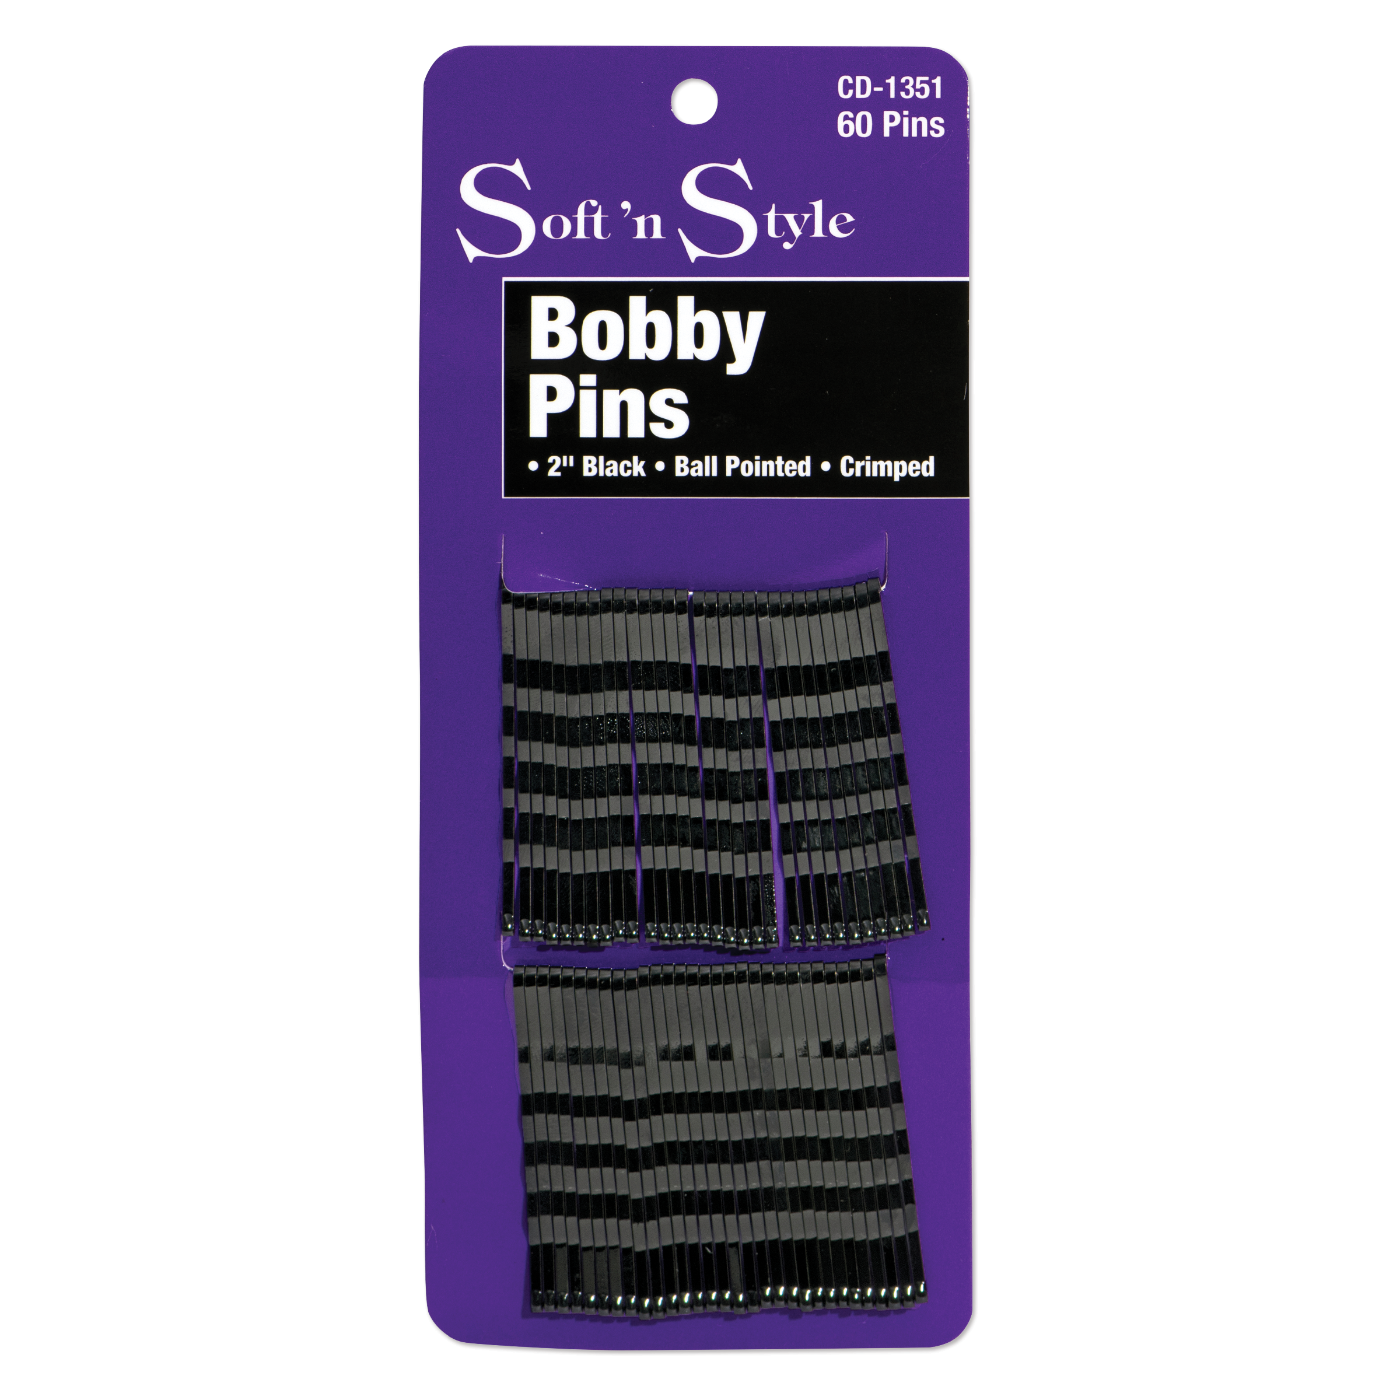 Bobby Pins, Black - 2"